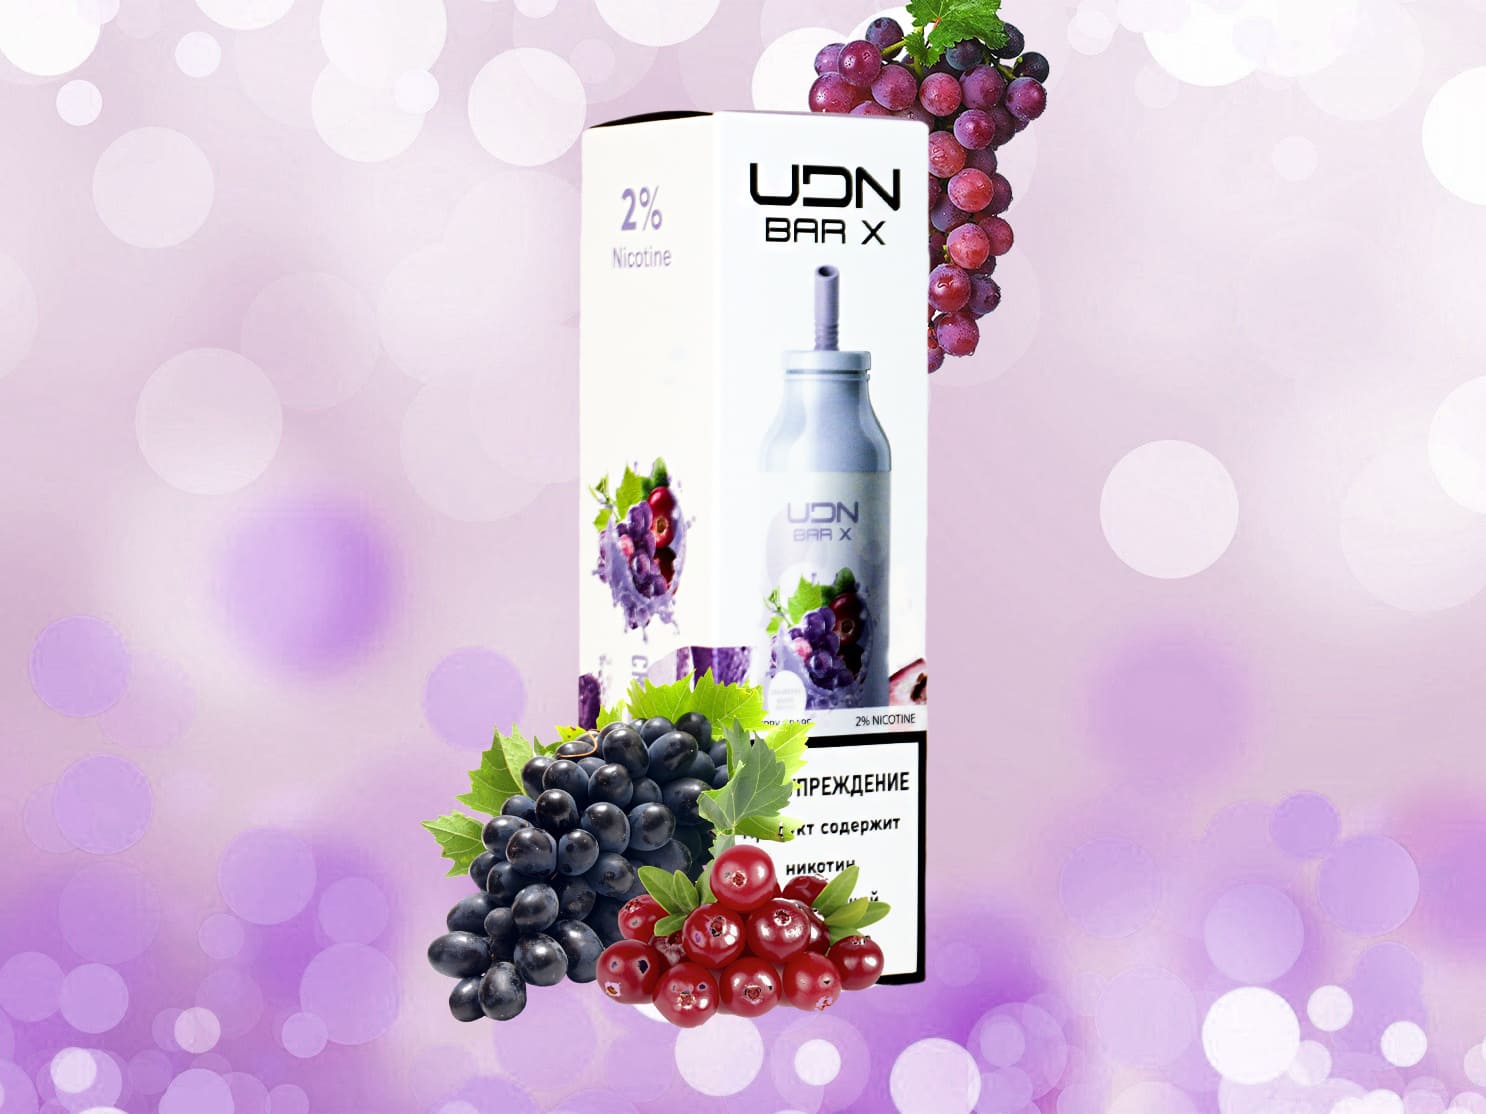 UDN BAR X 7000 / Cranberry grape